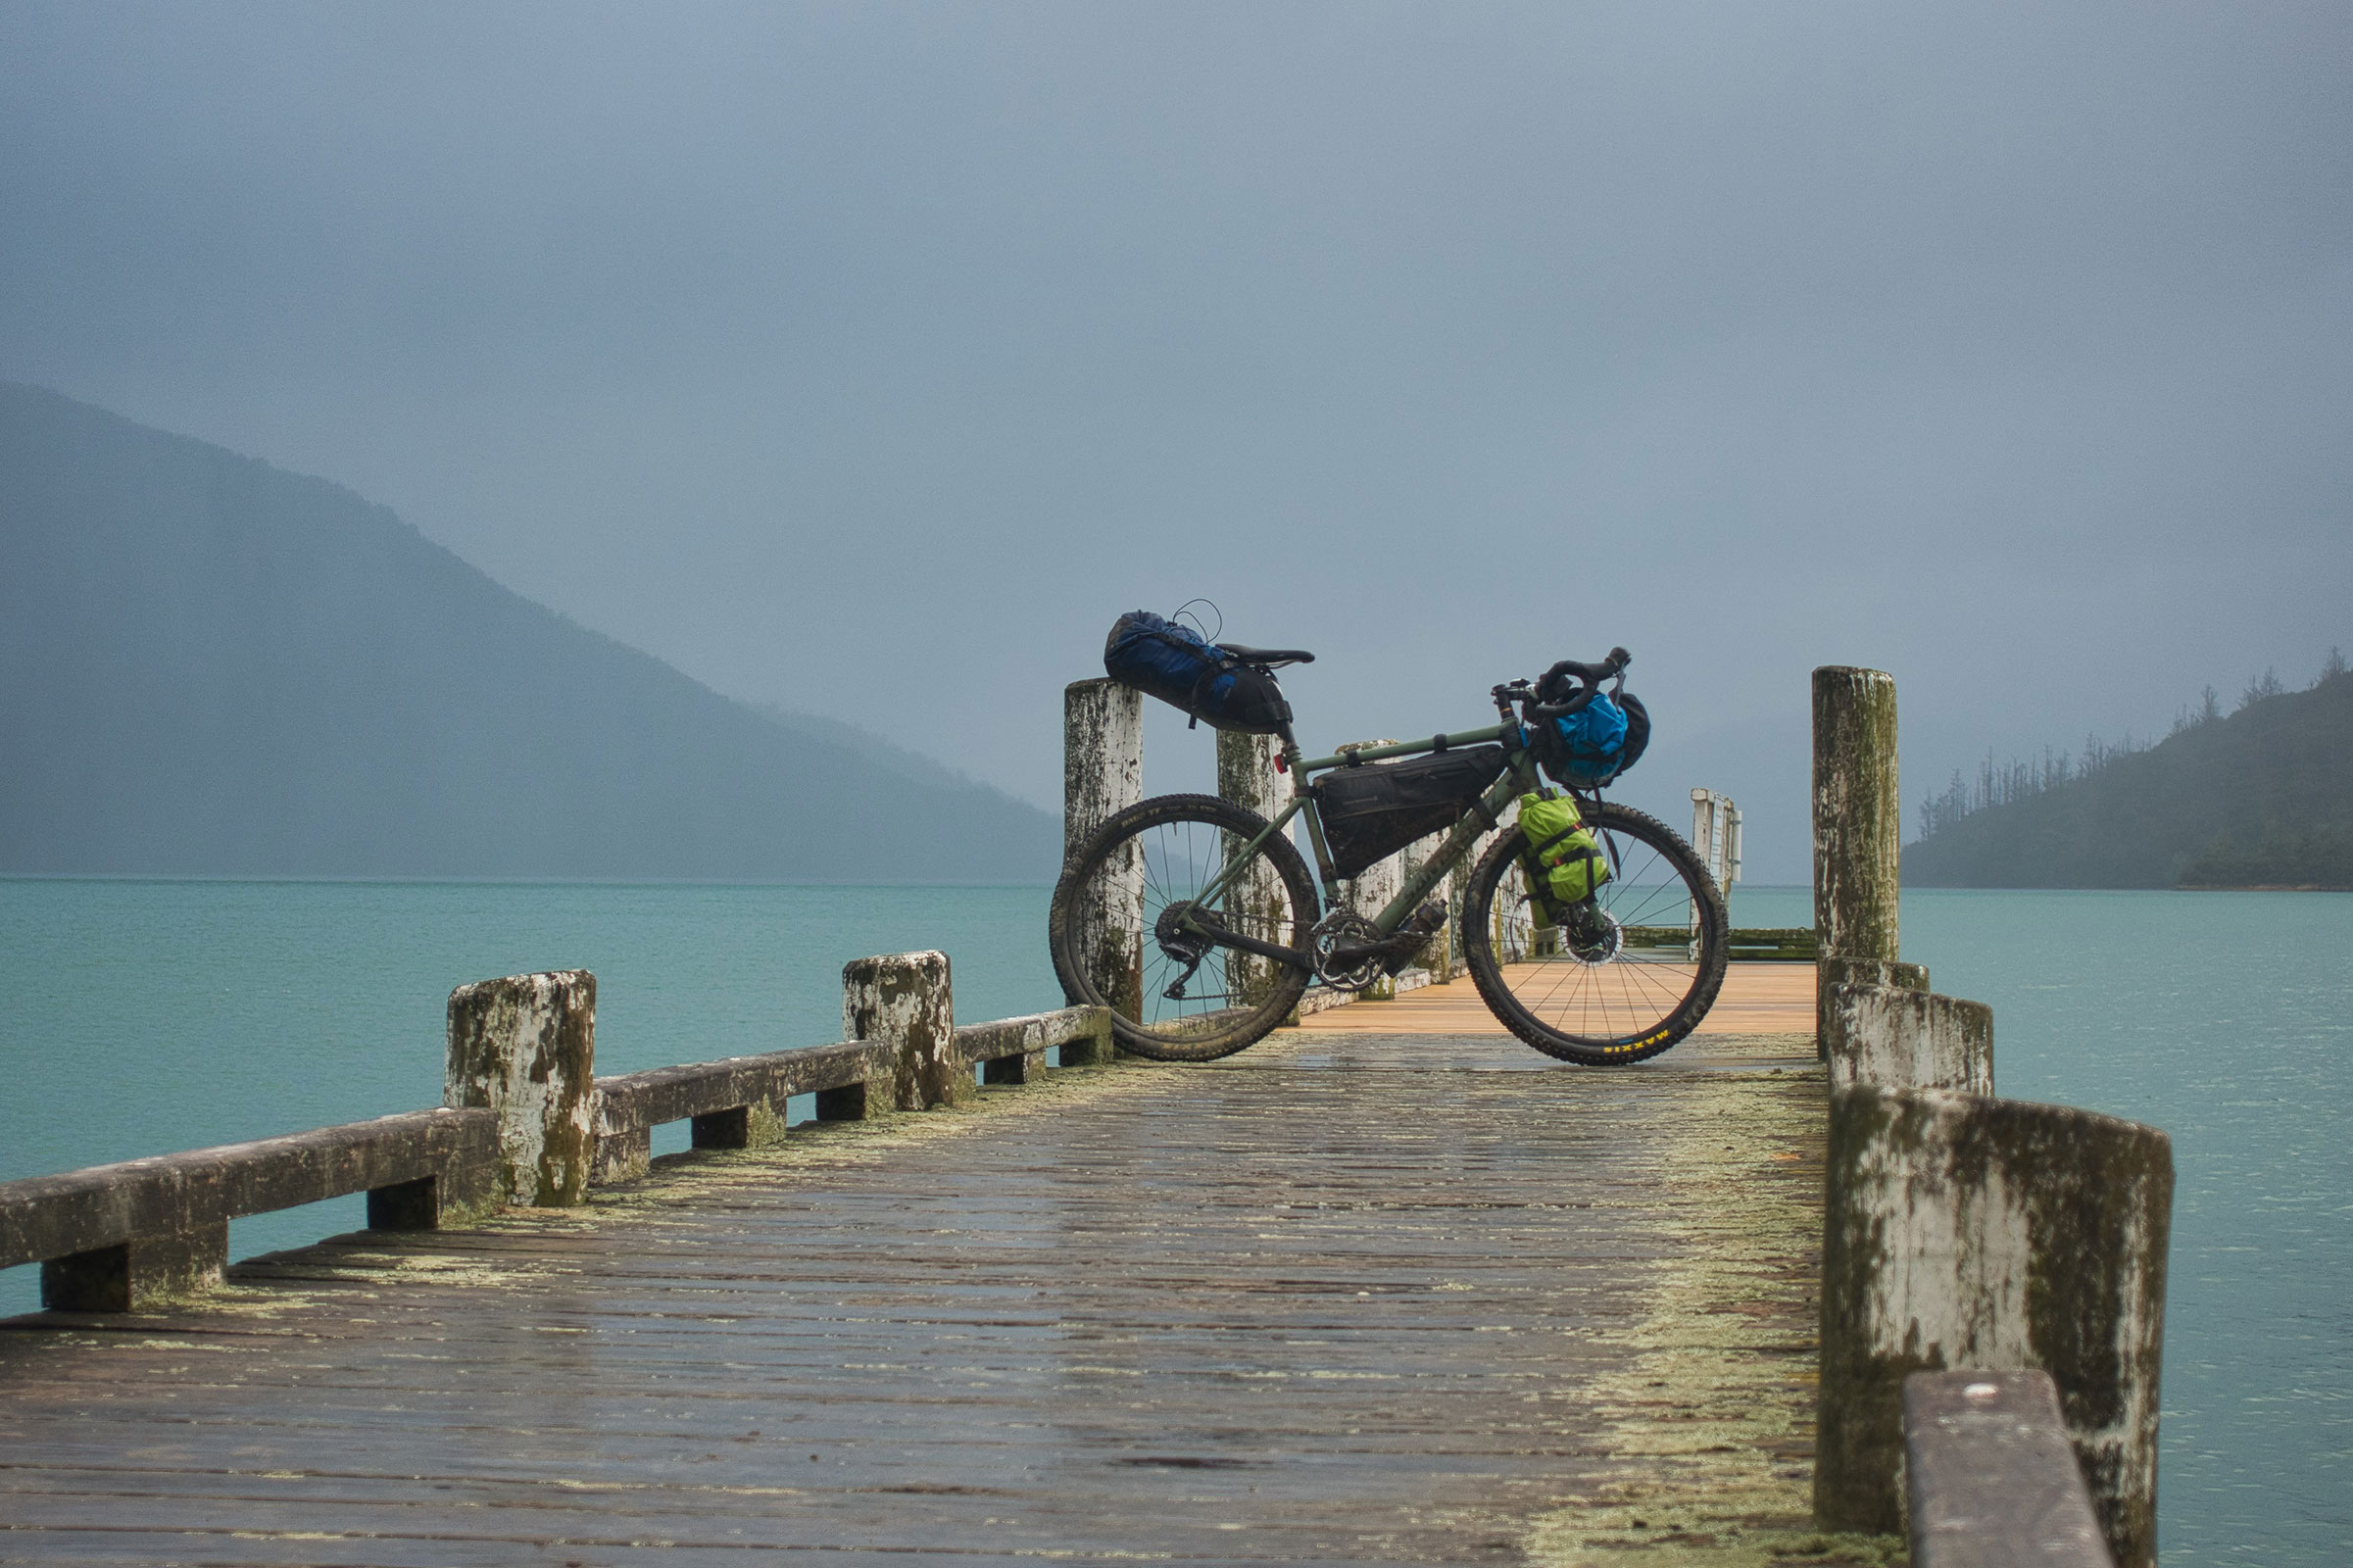 Mākū film, New Zealand gravel bike adventure